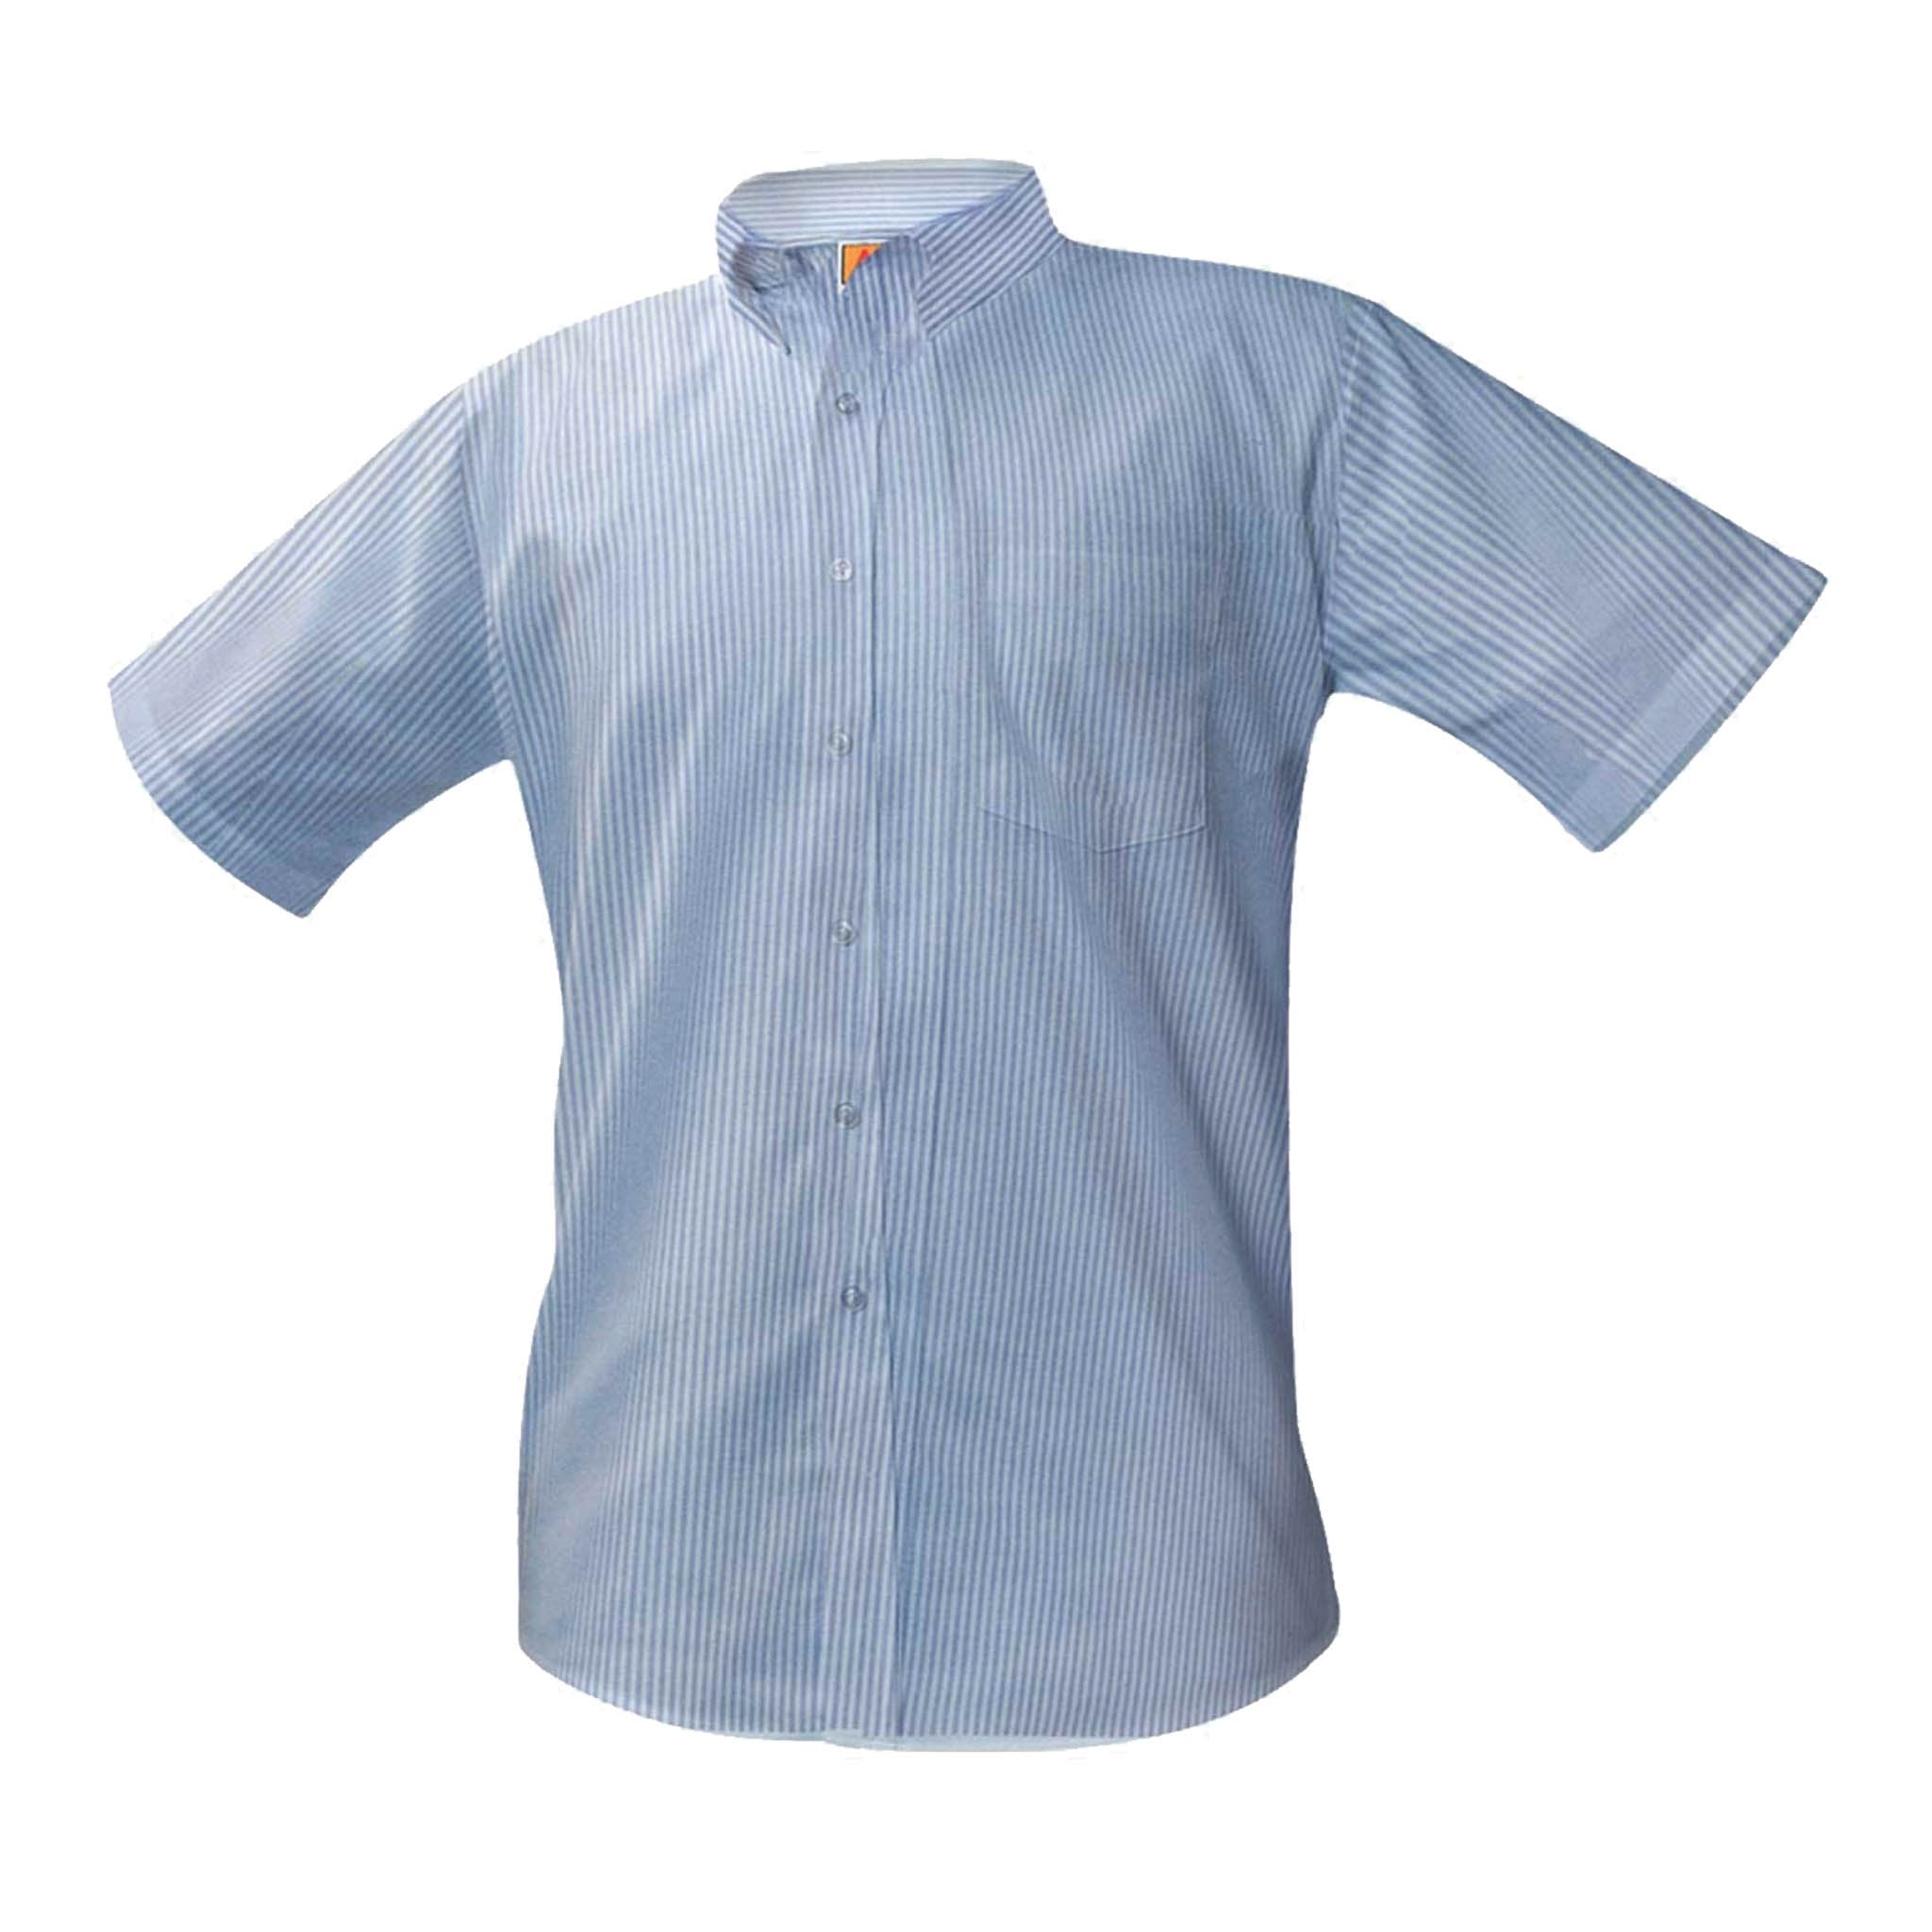 Boys/Men S/S Oxford Shirt